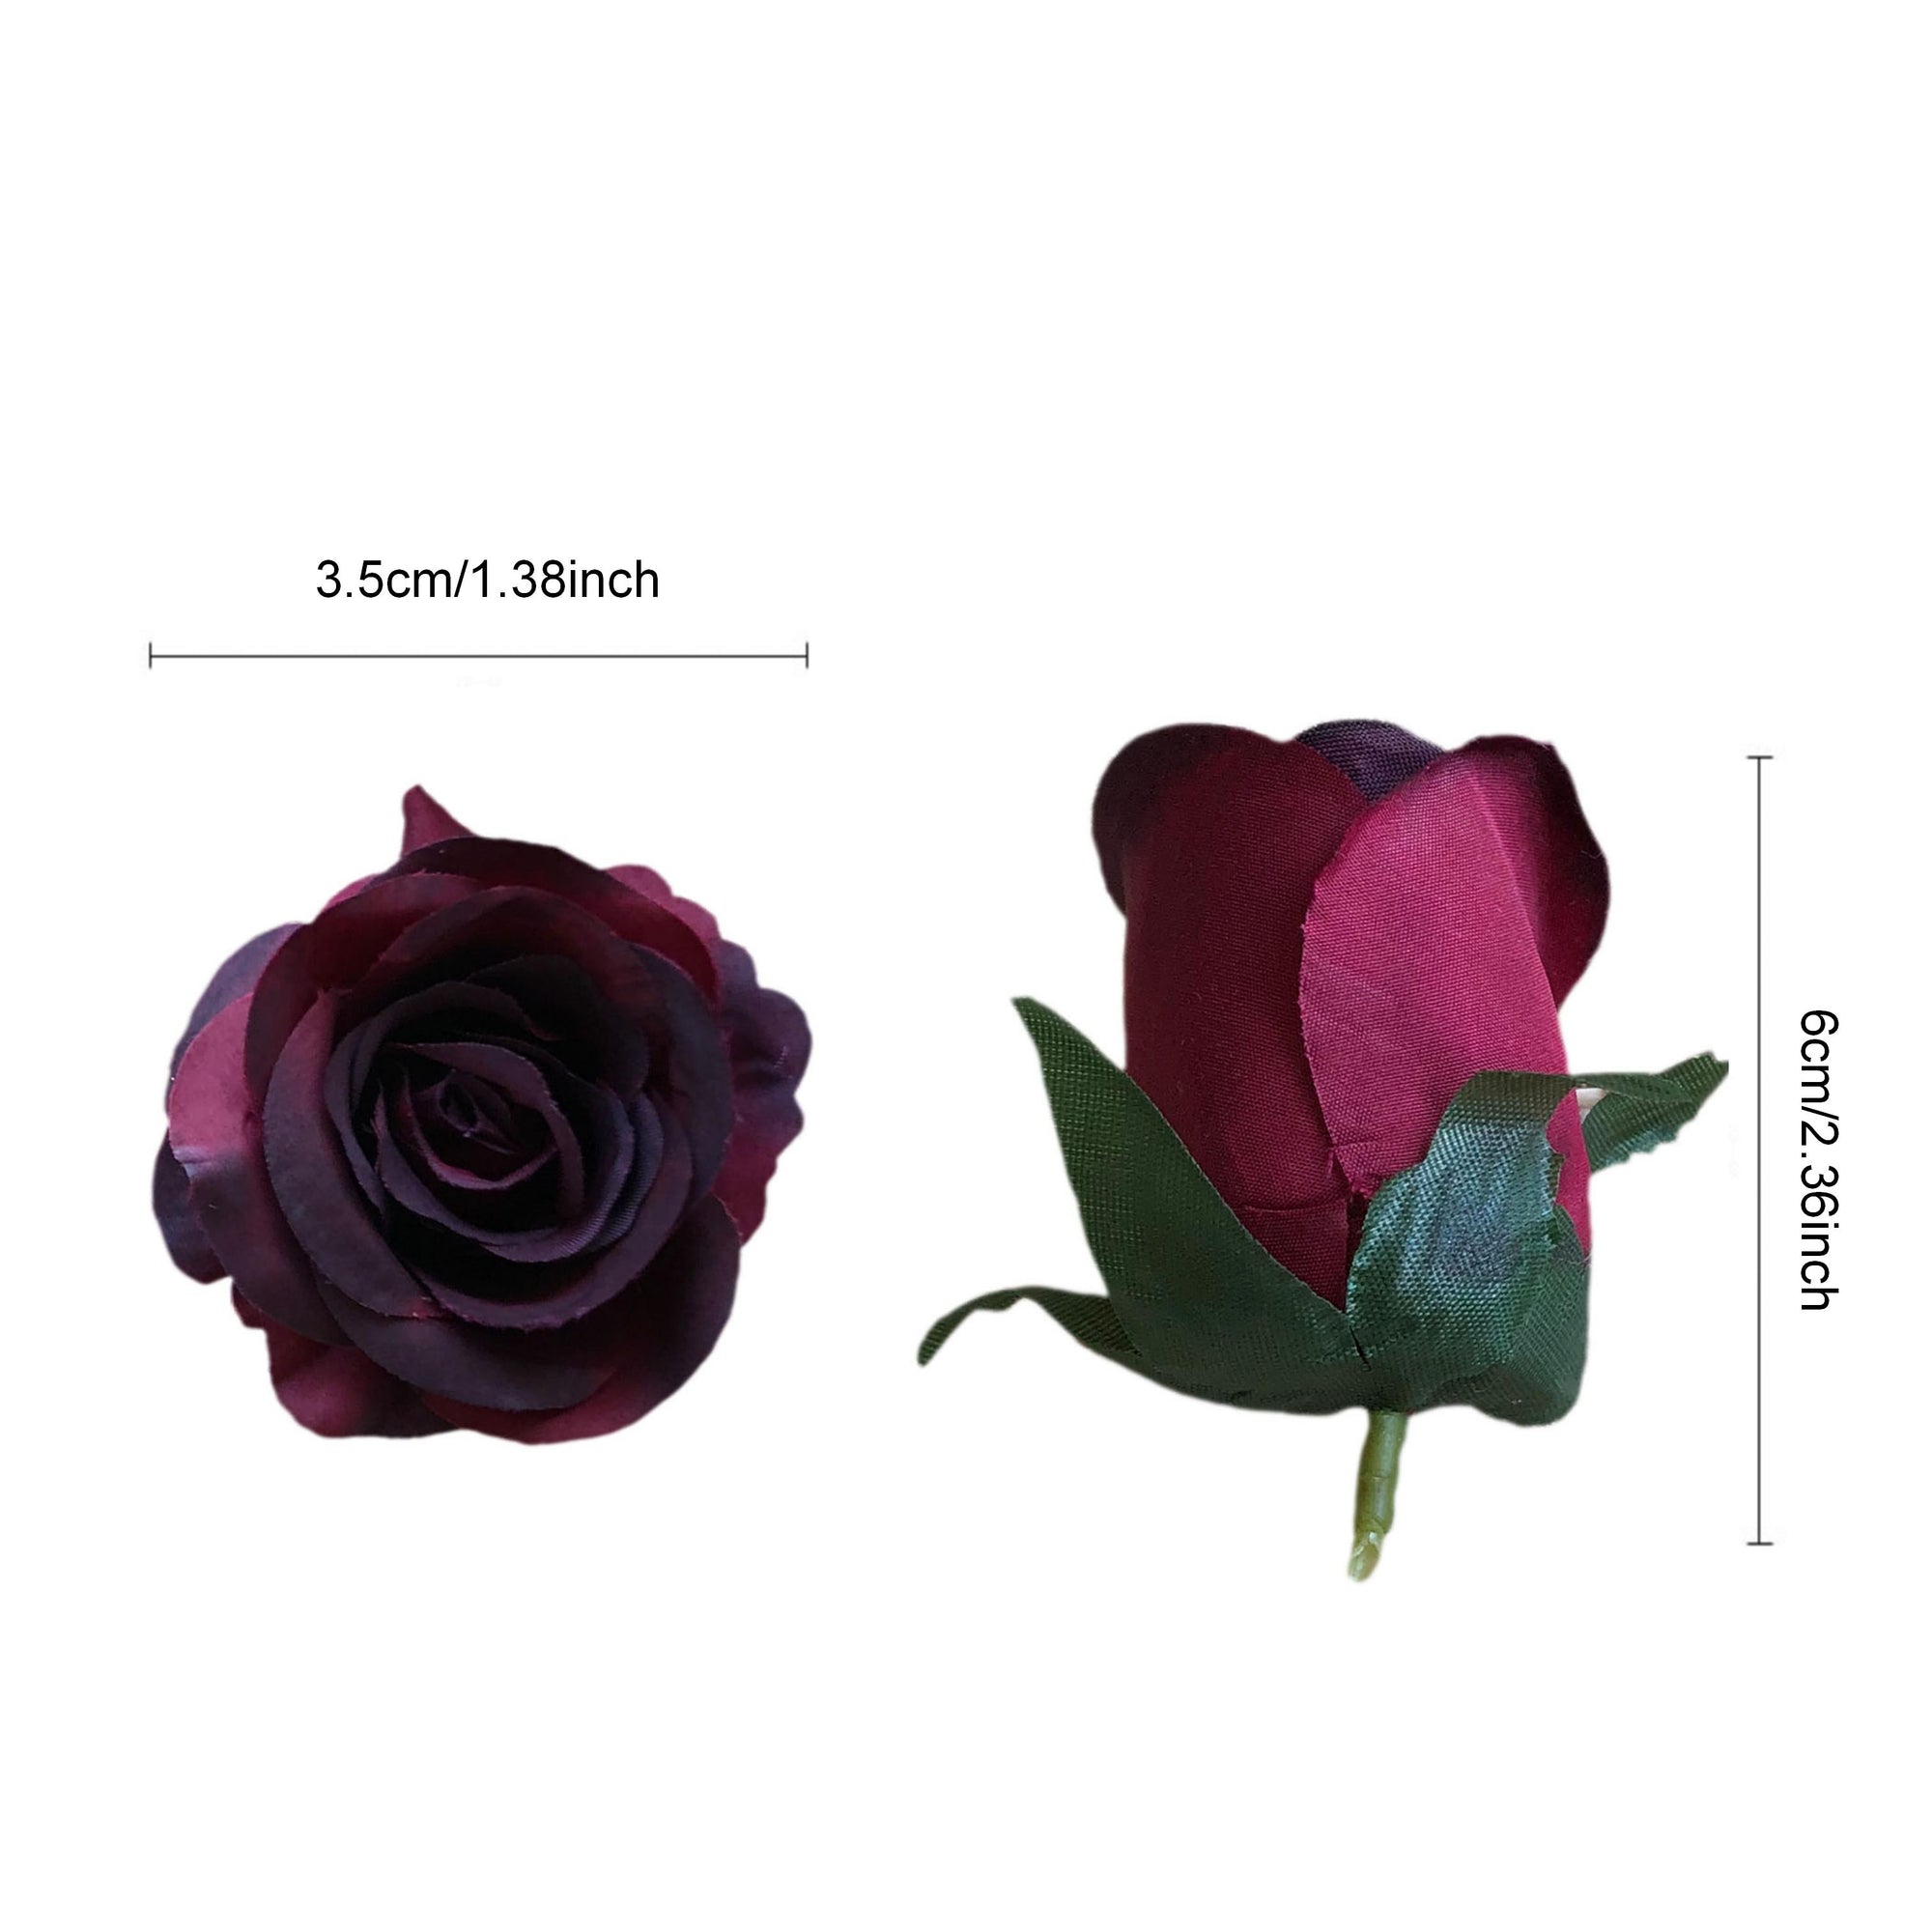 Burgundy Silk Roses Bulk Flowers 100pcs Wedding Floral Supplies